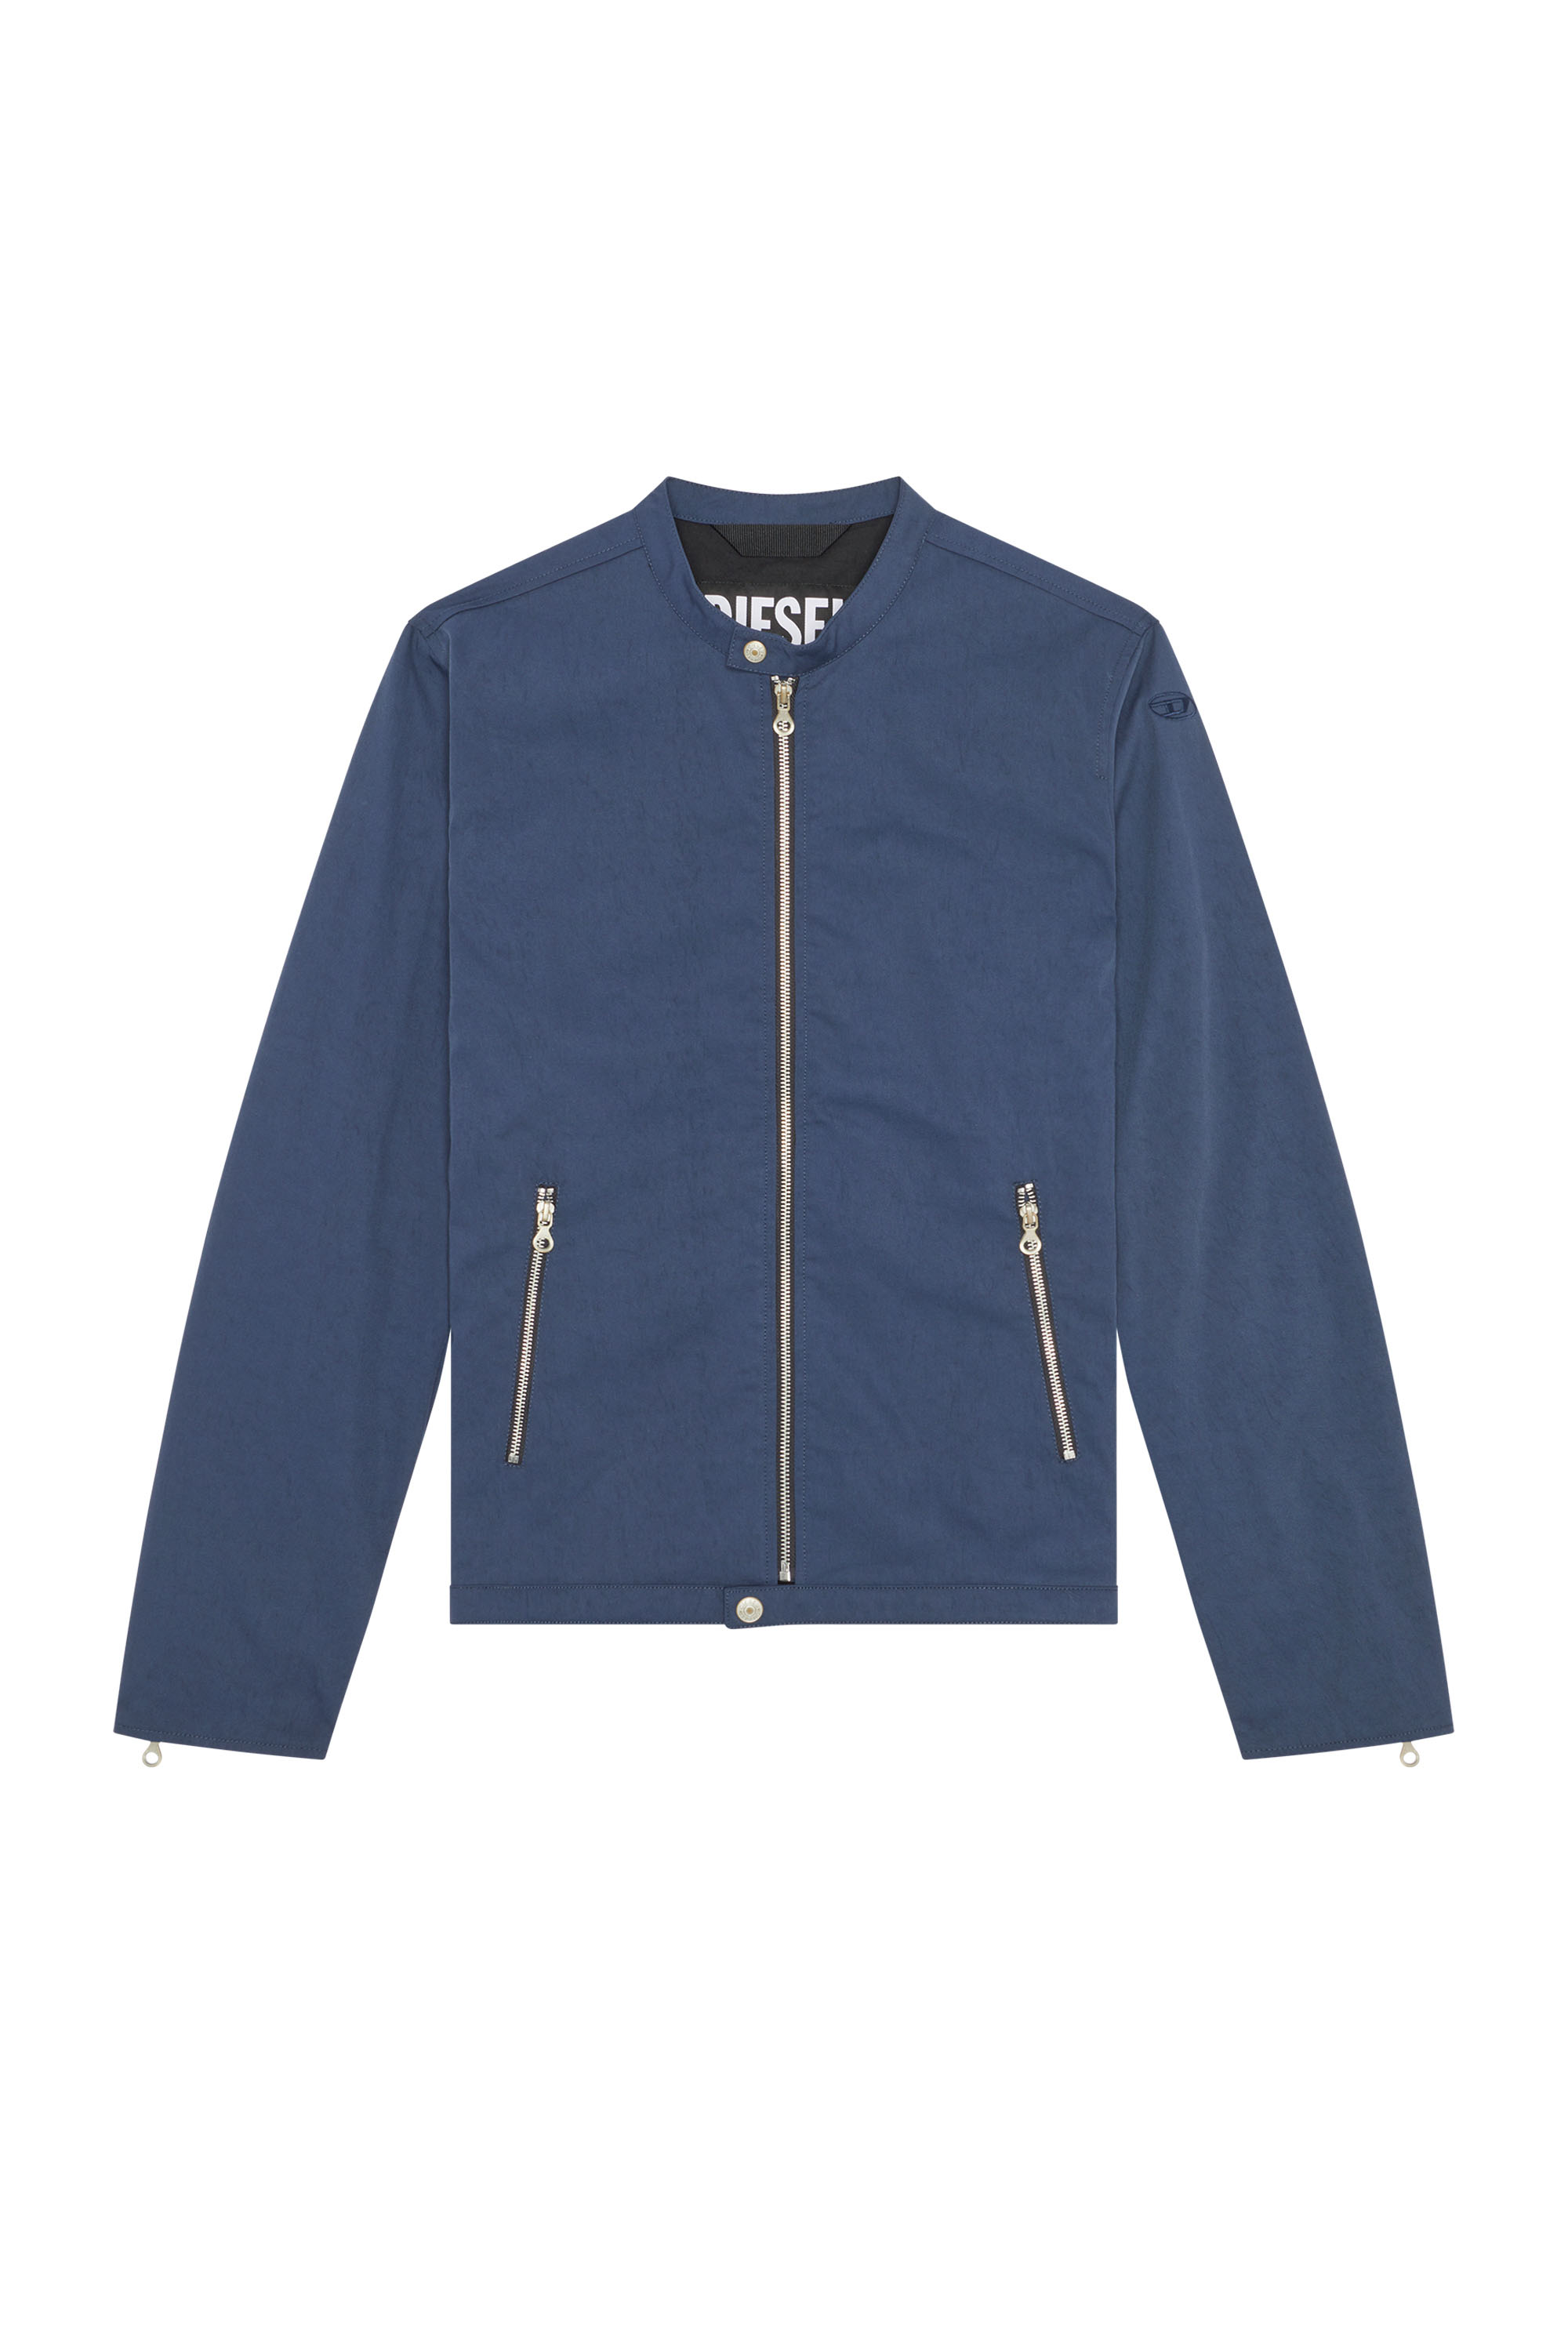 Diesel - J-GLORY-NW, Male Biker jacket in cotton-touch nylon in Blue - Image 5